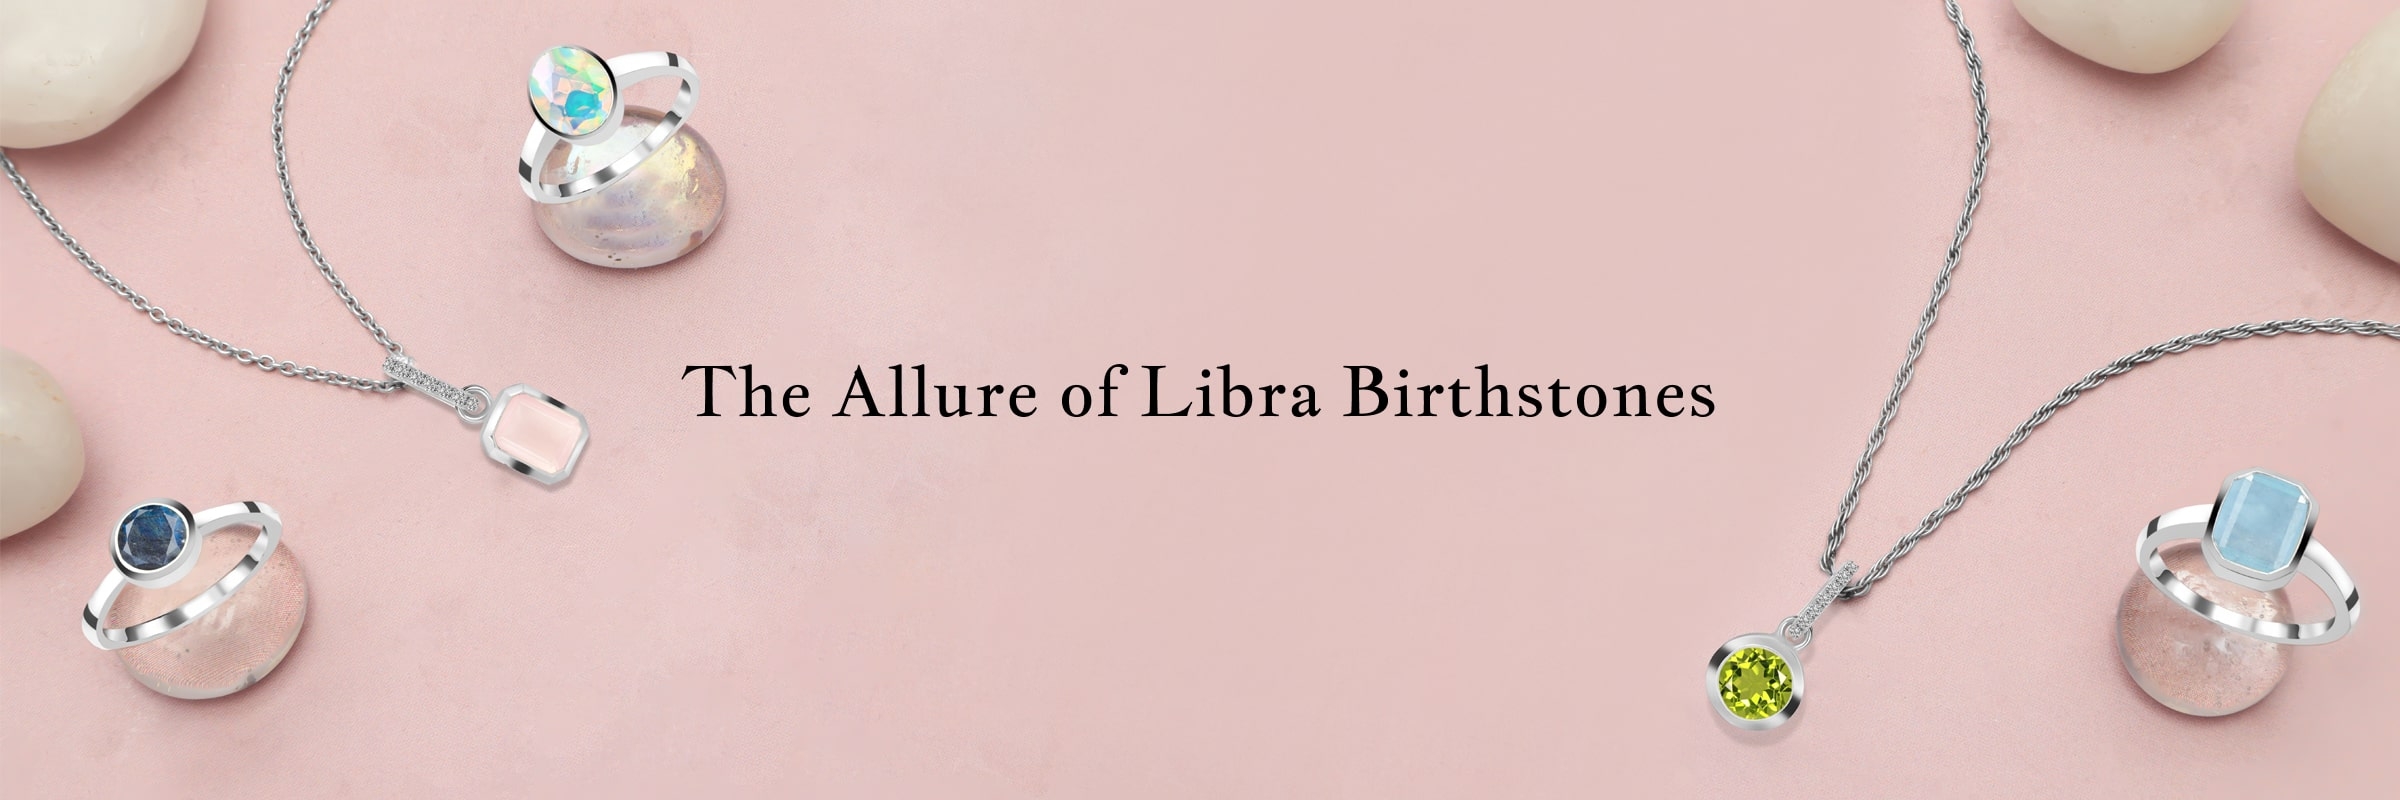 Libra Birthstones